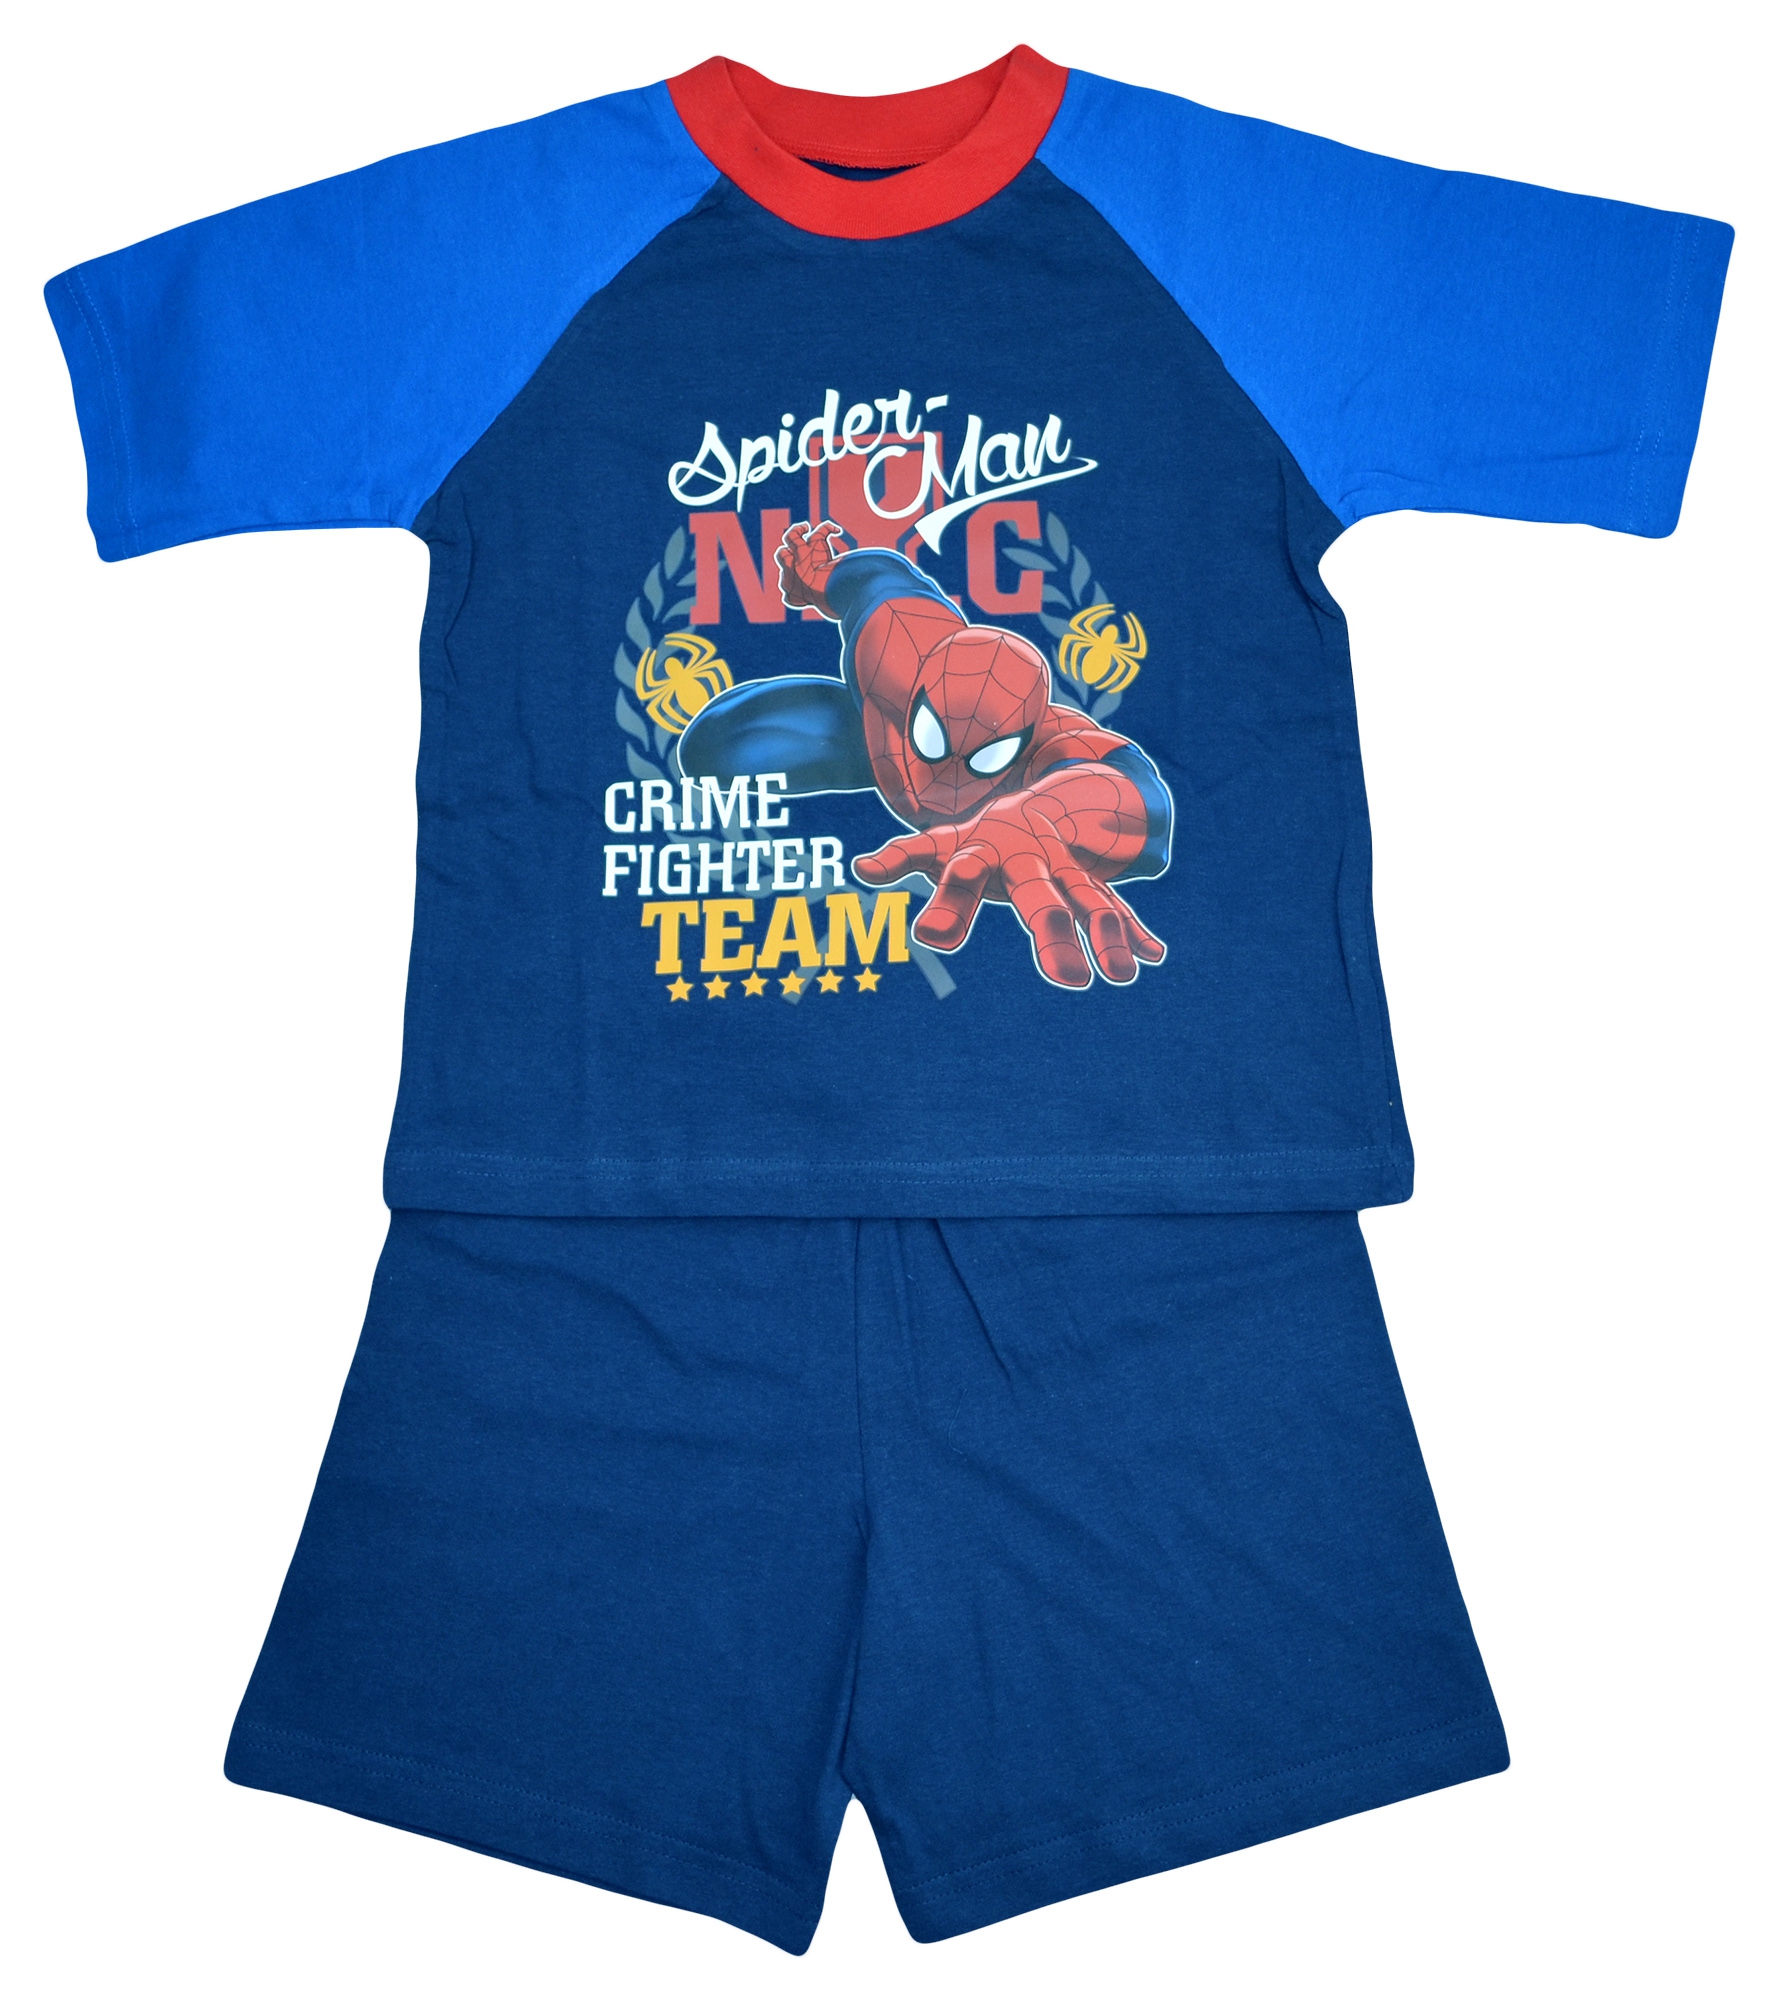 Spiderman 'Crime Fighter' Boys Short Pyjama Set 5-6 Years